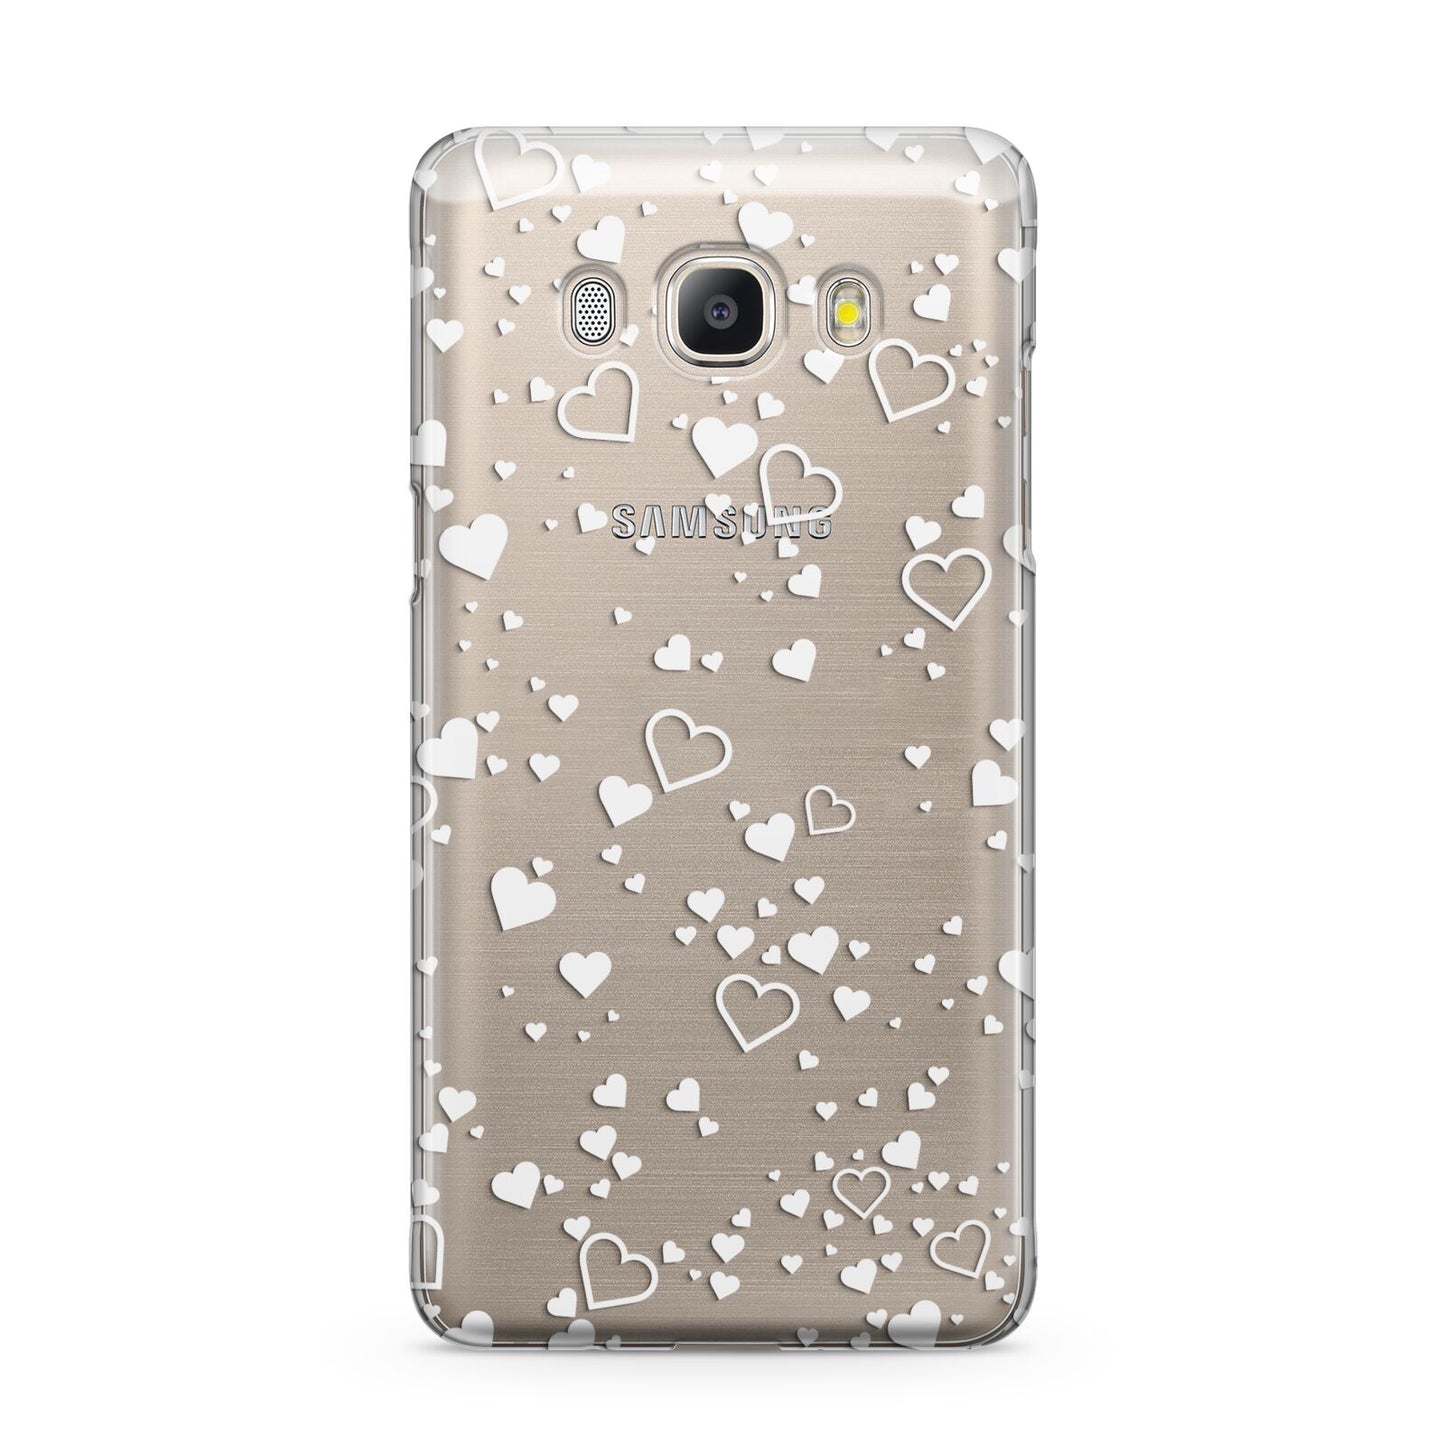 White Heart Samsung Galaxy J5 2016 Case